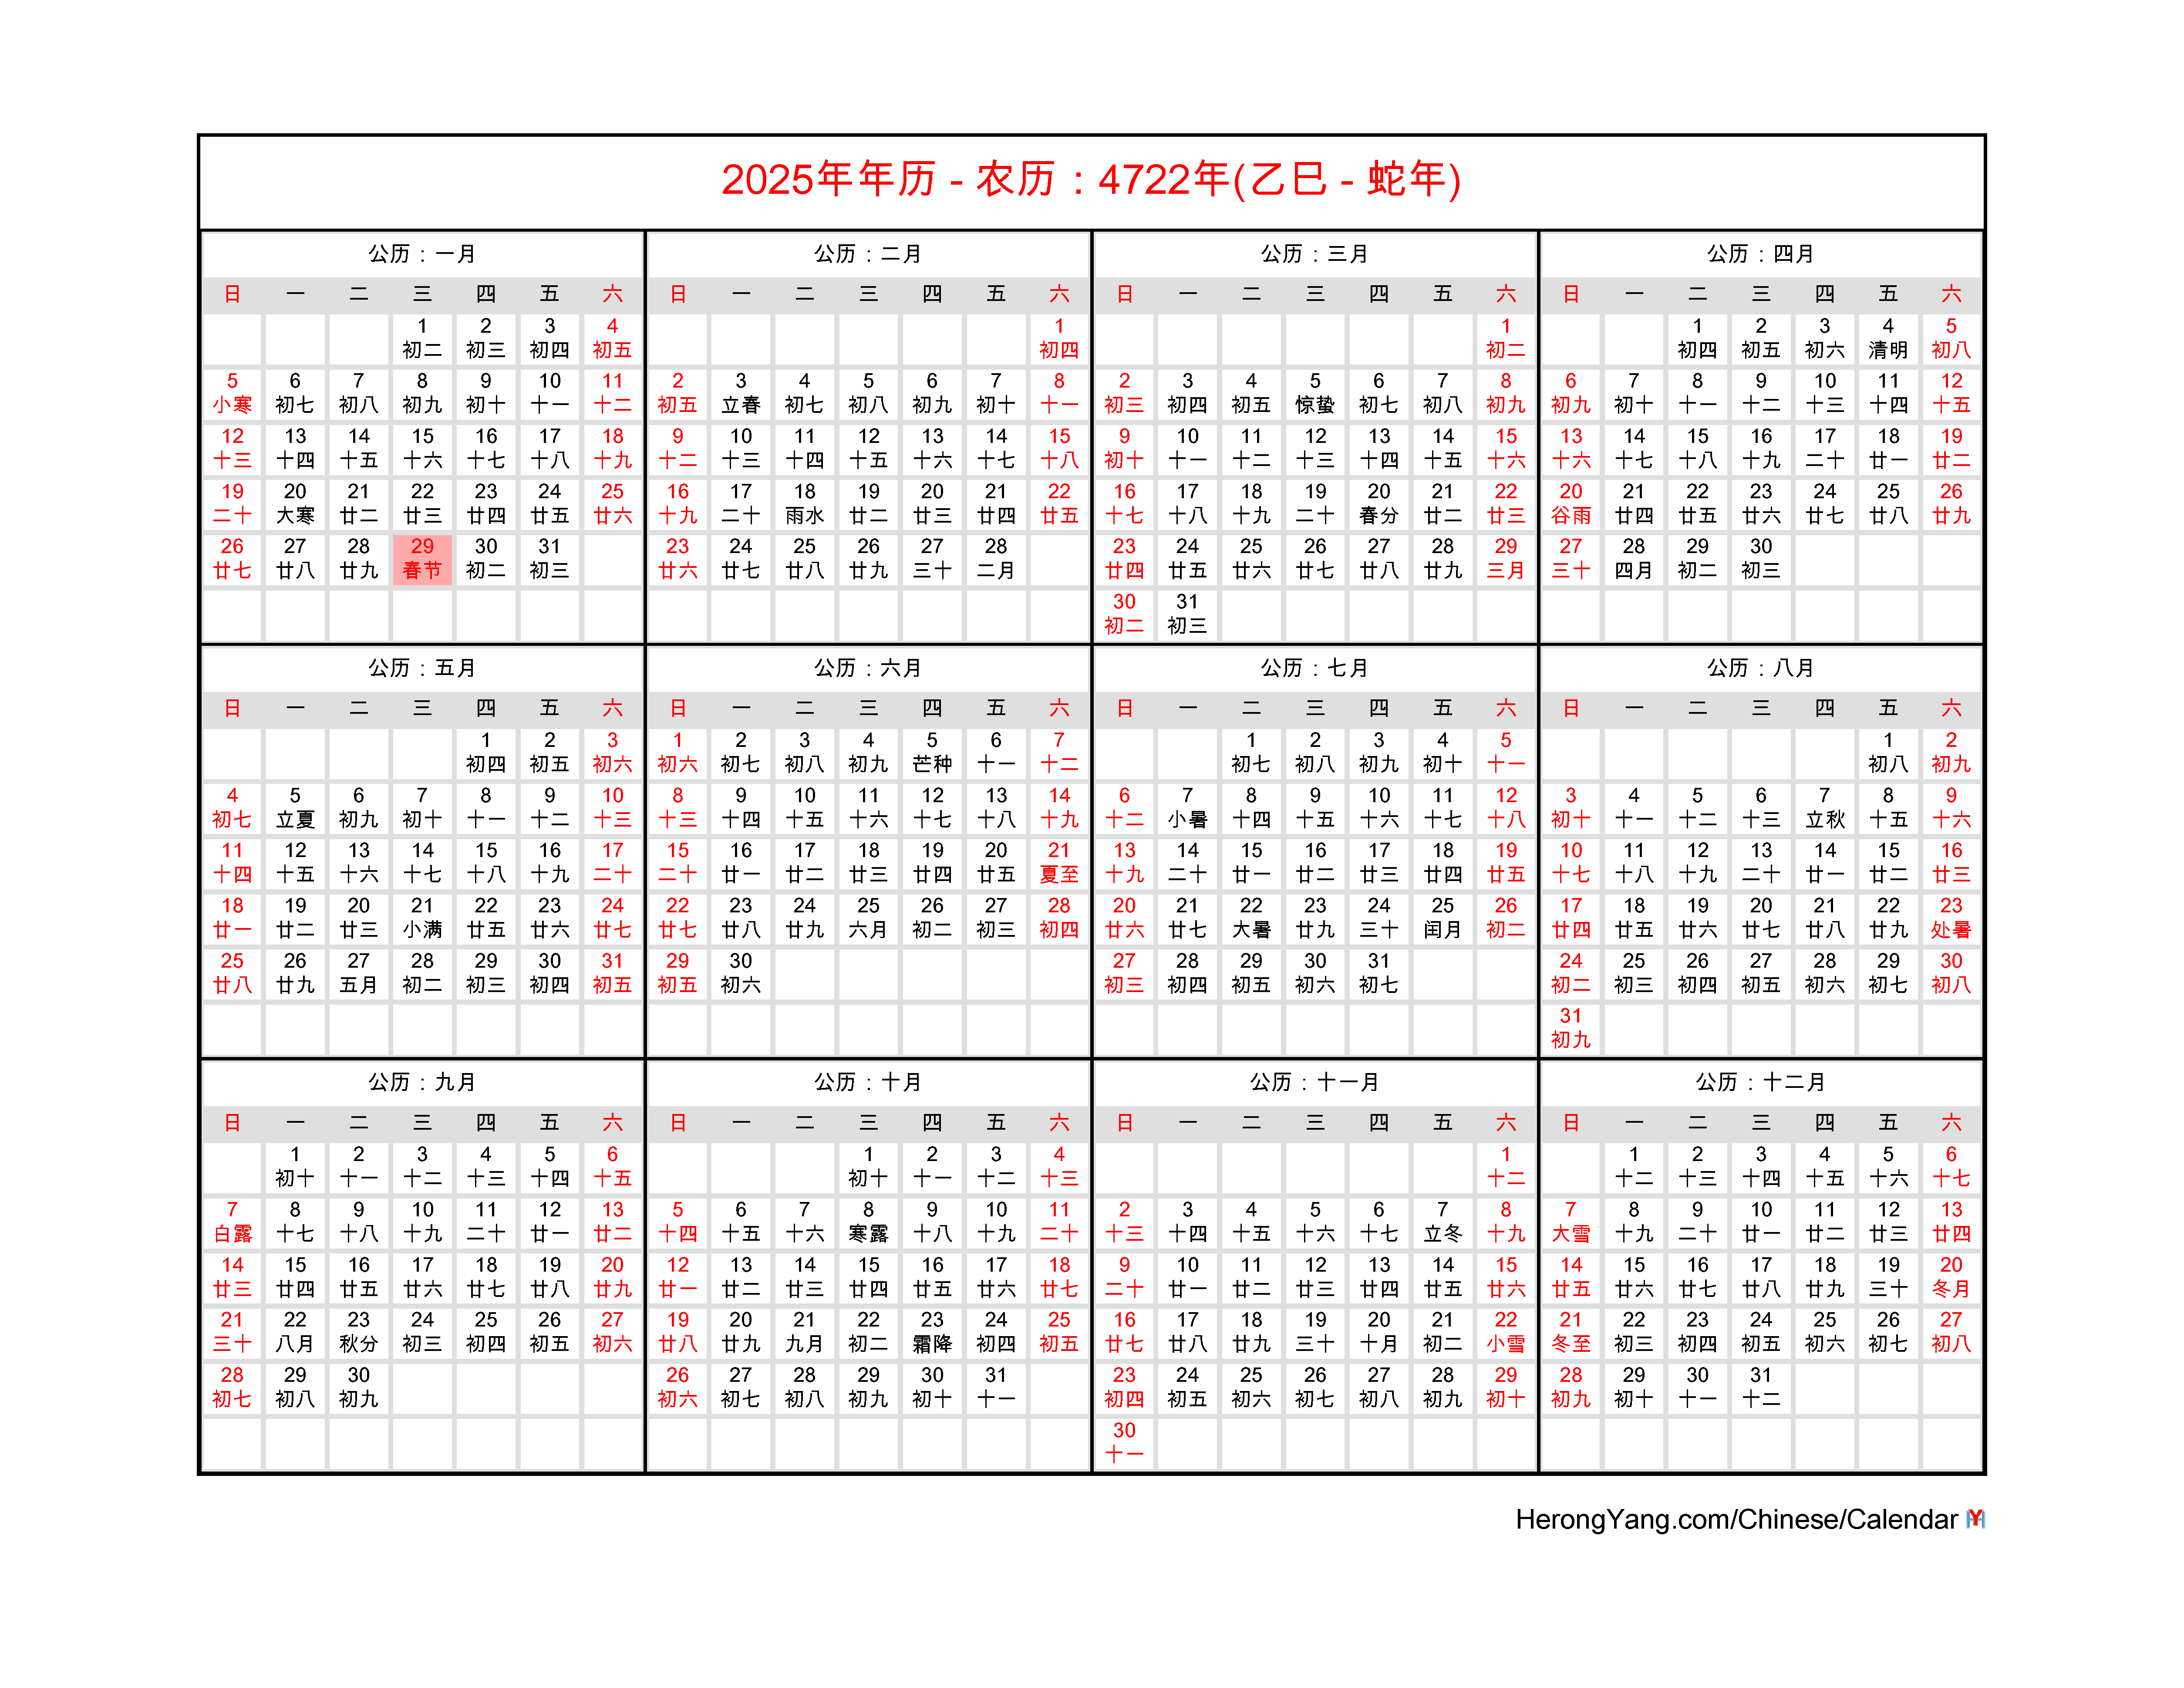 Chinese New Year 2025 Calendar